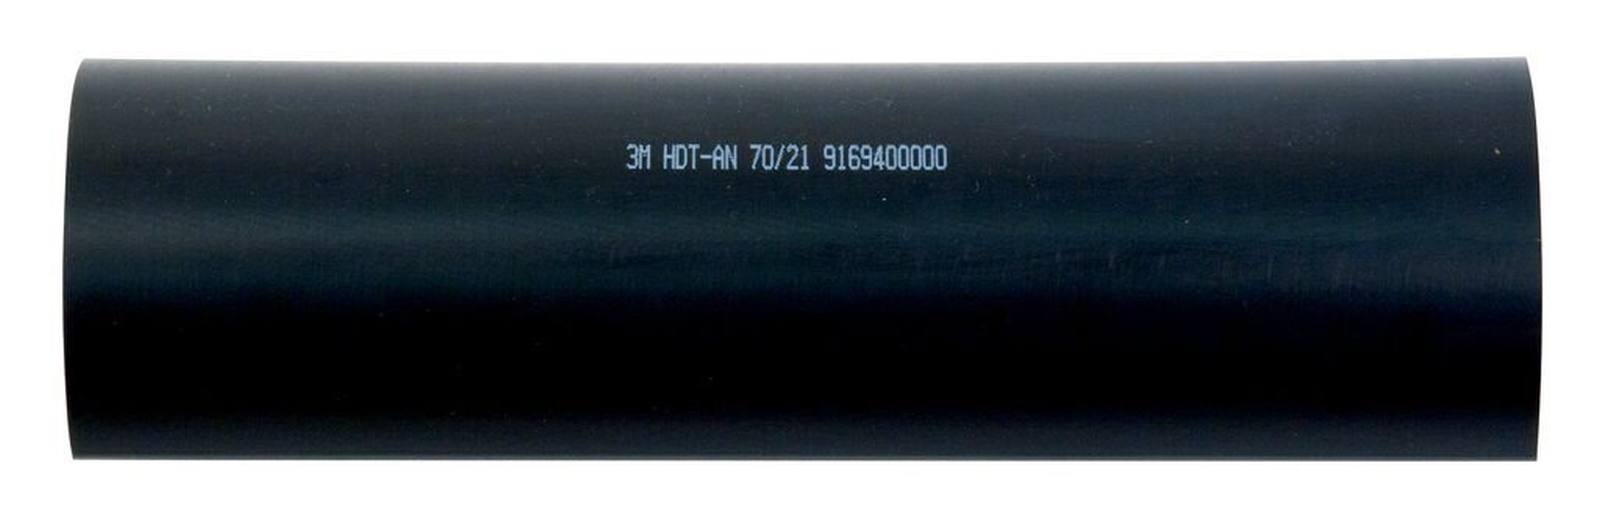 3M HDT-AN Tubo termorretráctil de pared gruesa con adhesivo, negro, 70/21 mm, 1 m